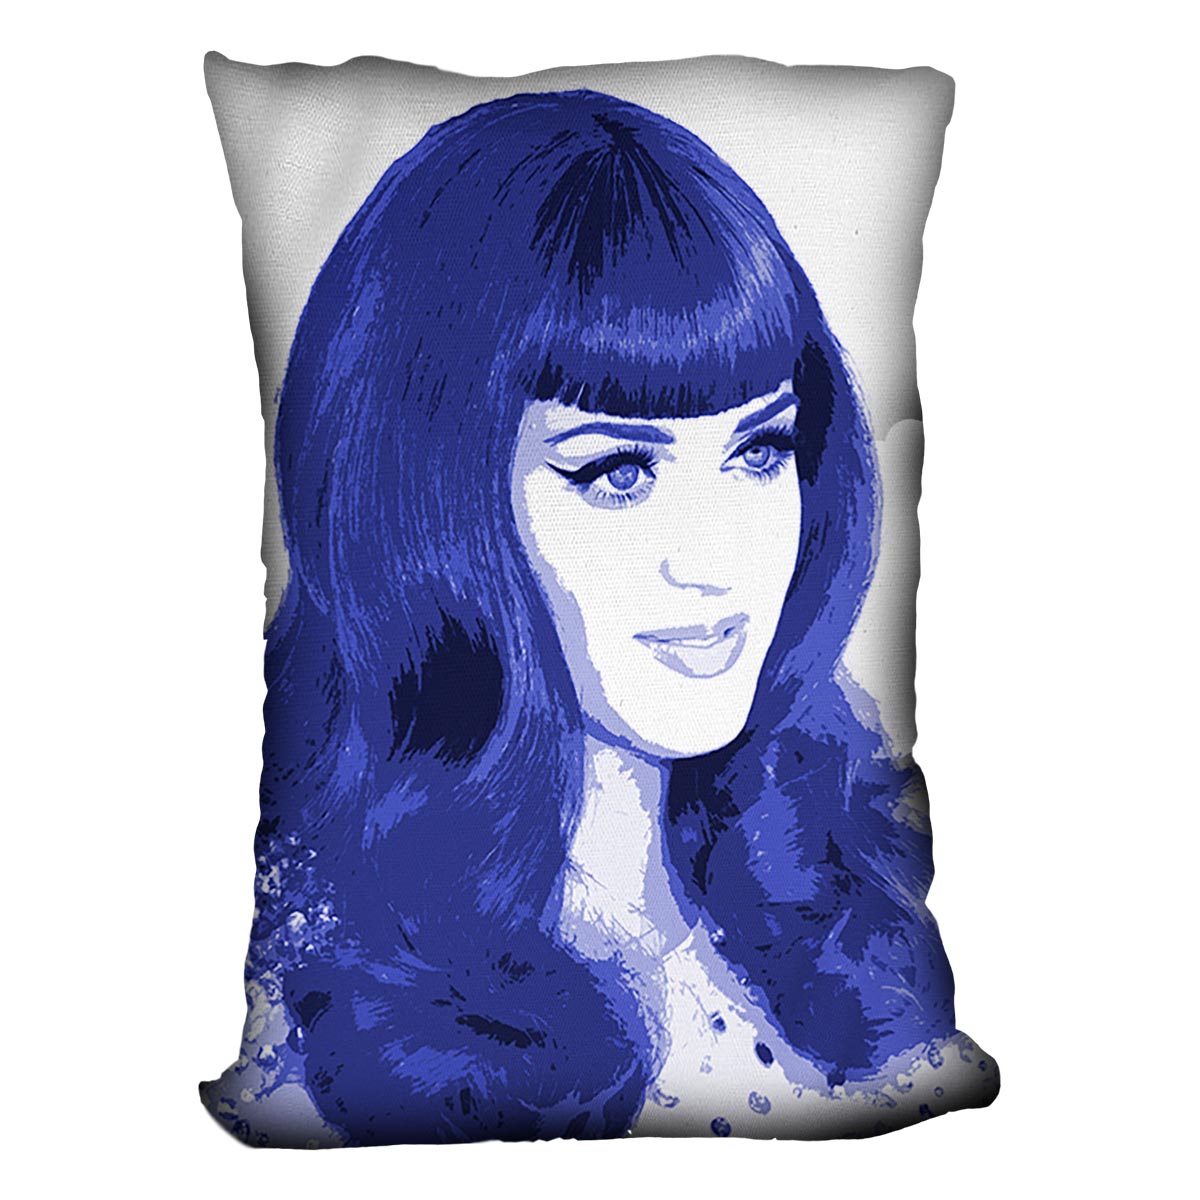 Katy Perry in blue pop art Cushion